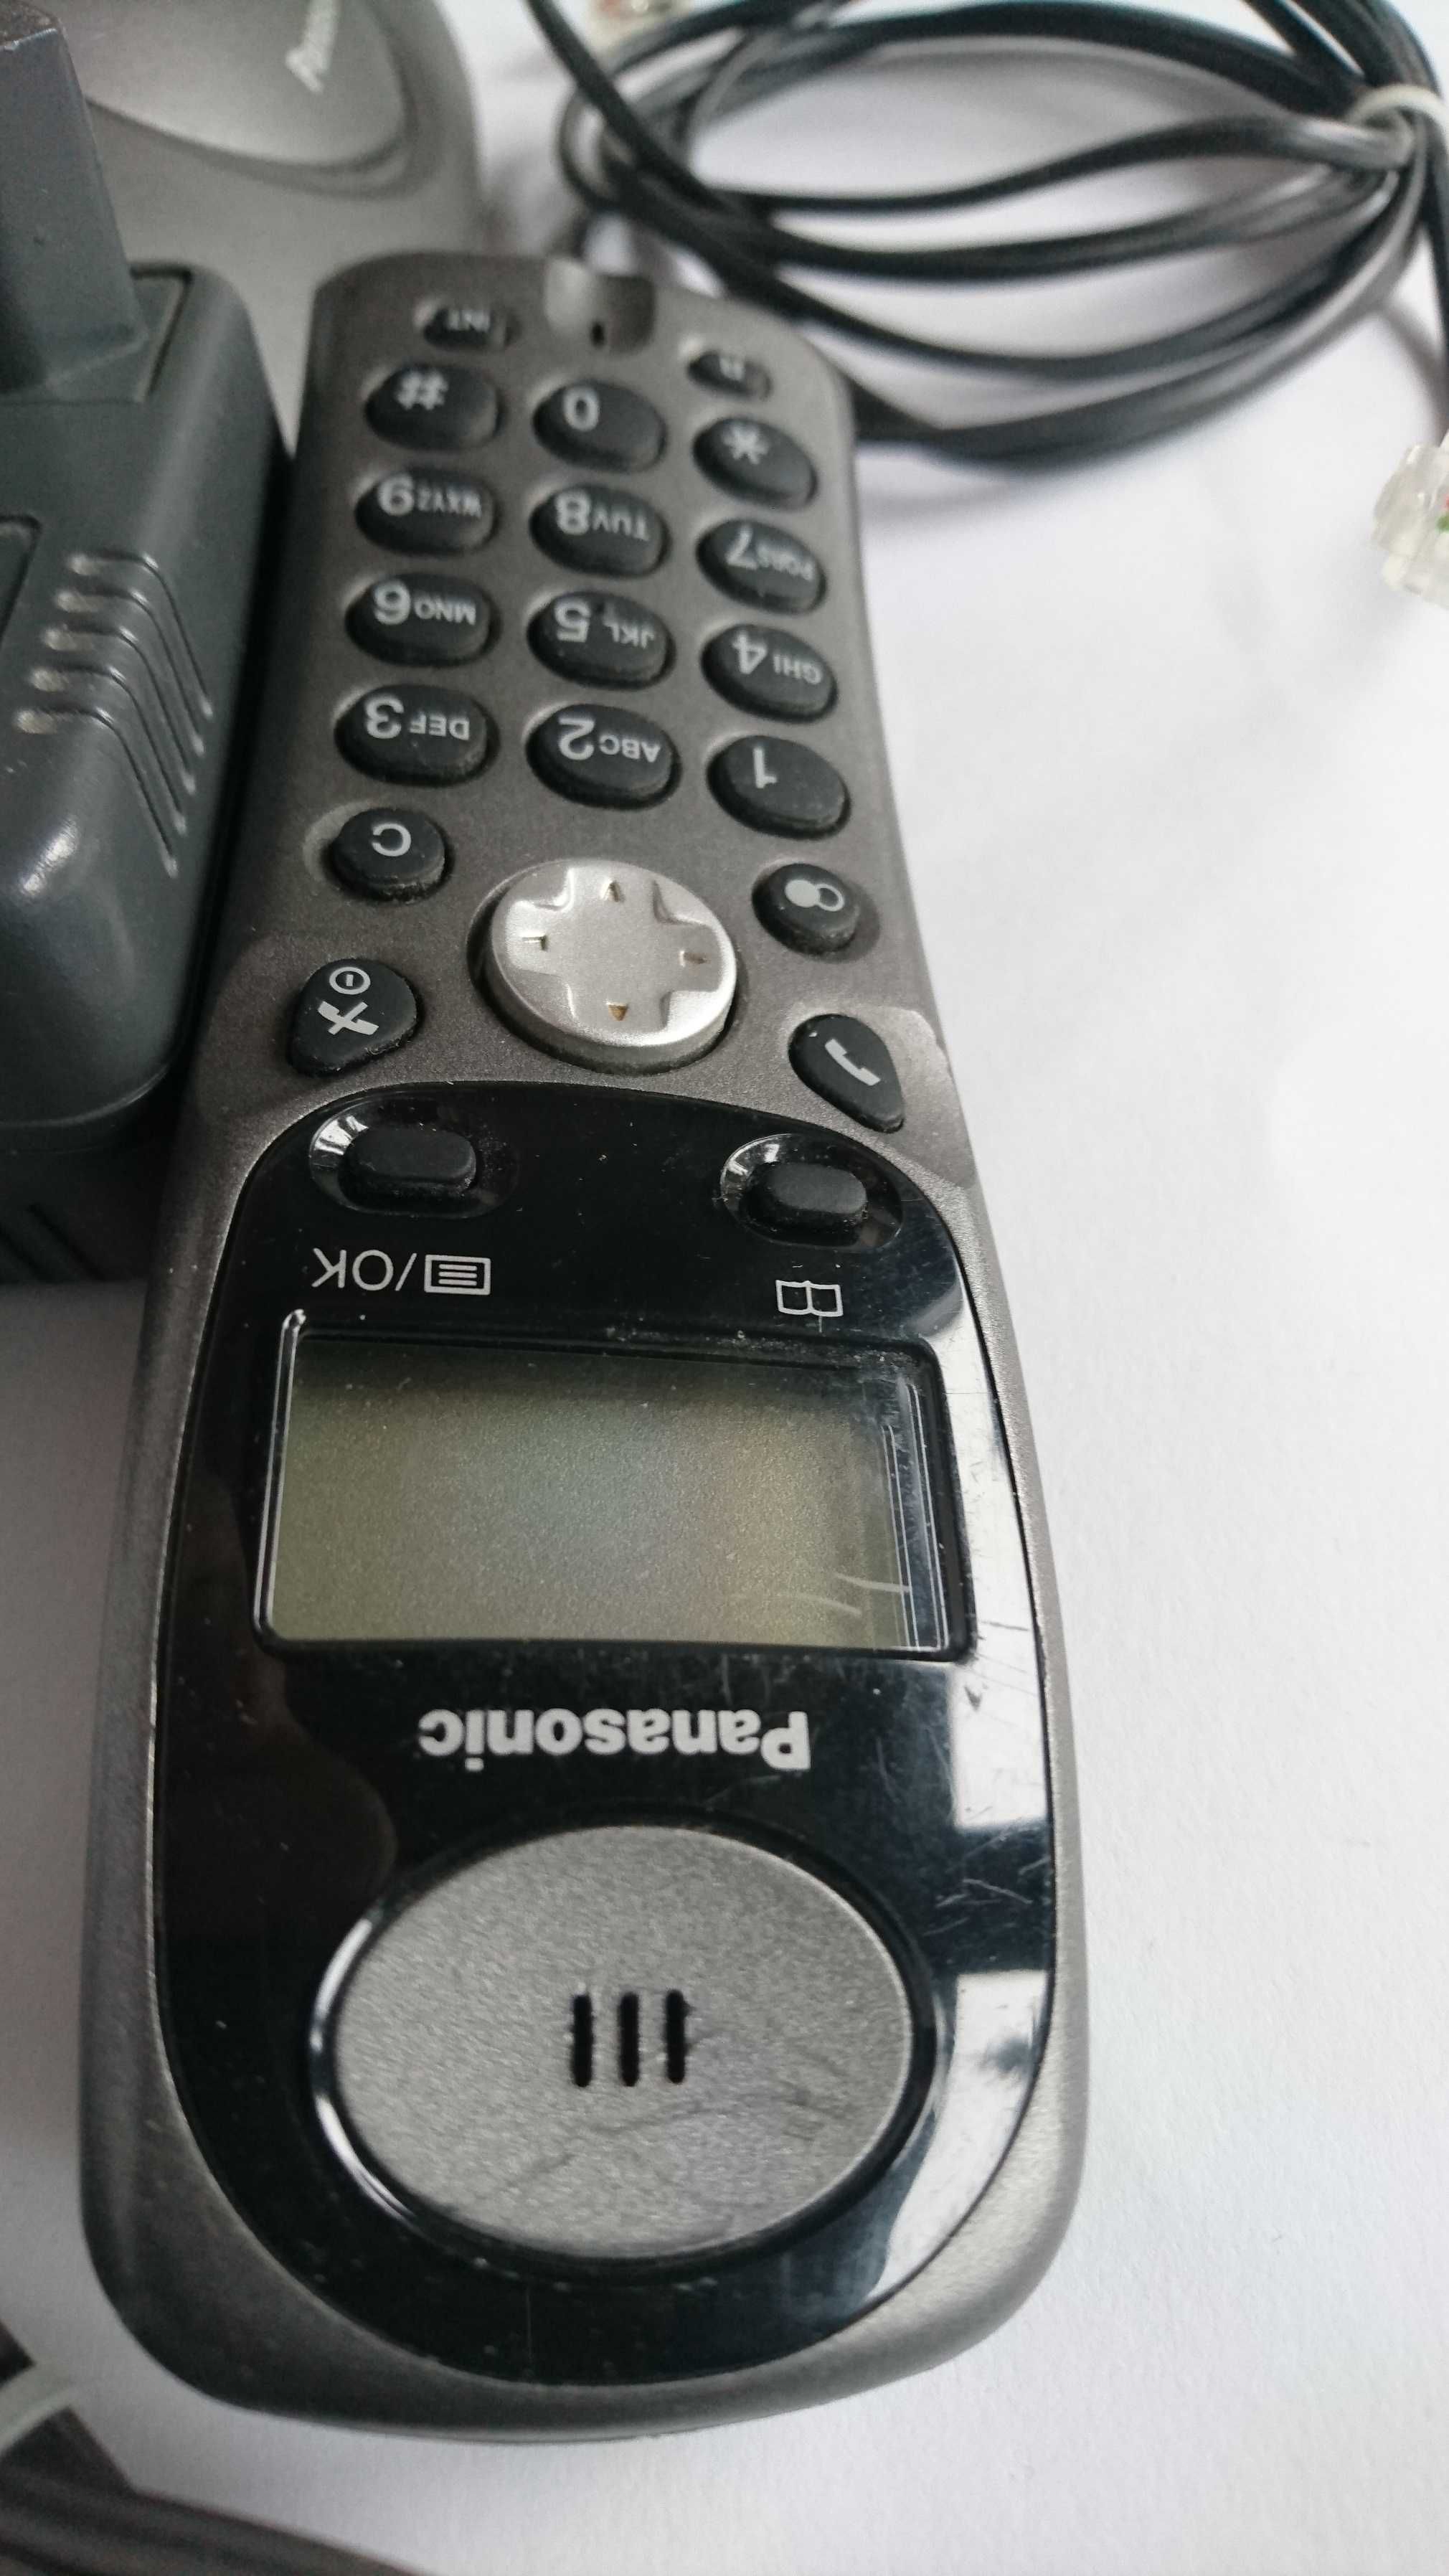 telefon bezprzewodowy panasonic kx-tg1100pd